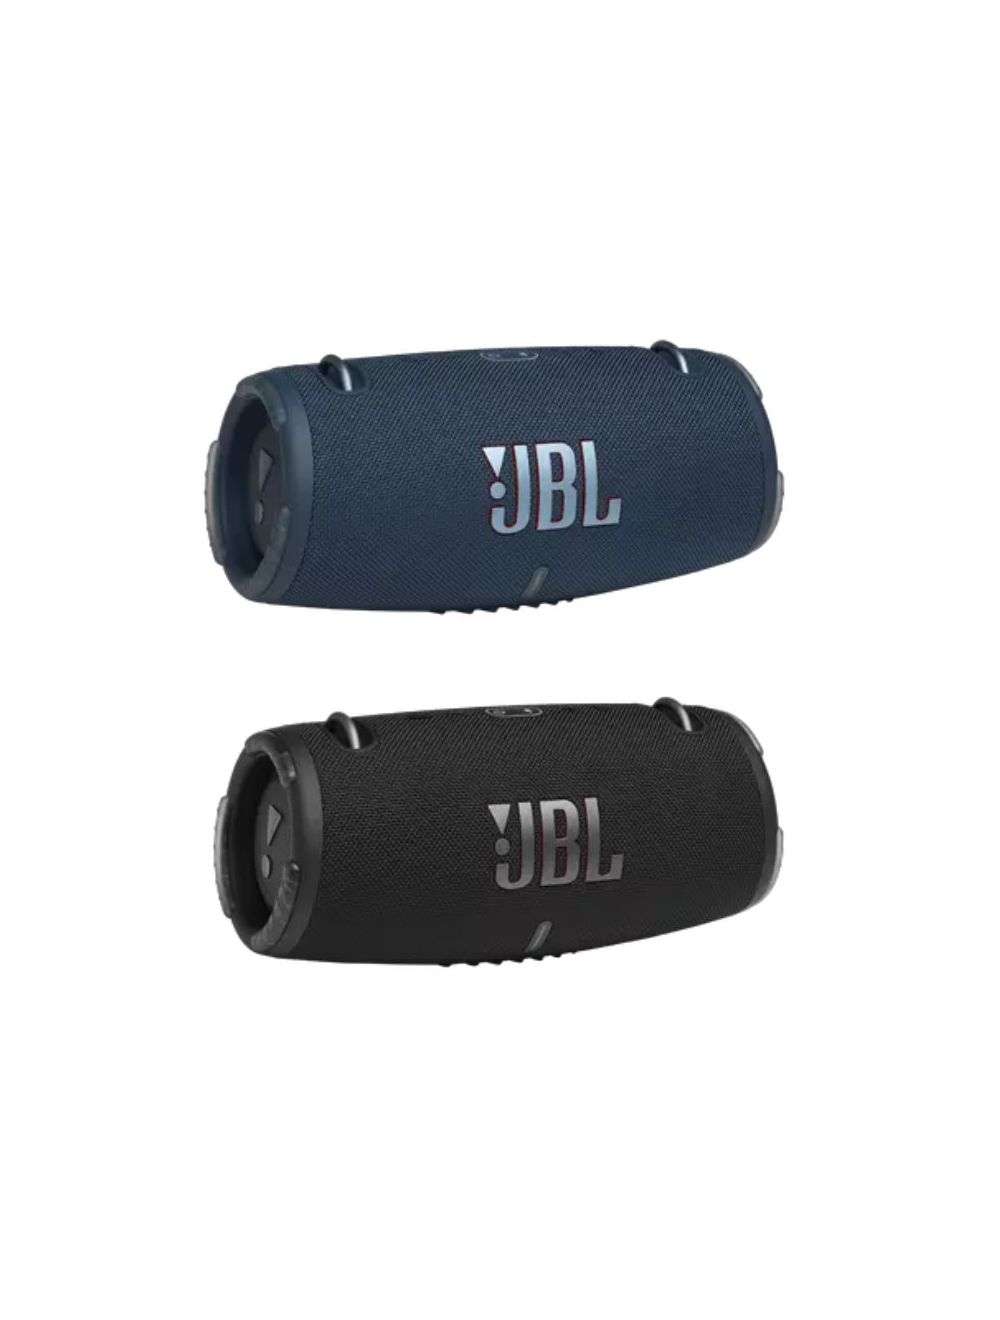 JBL Lifestyle Xtreme 3 Waterproof Portable Bluetooth Speaker